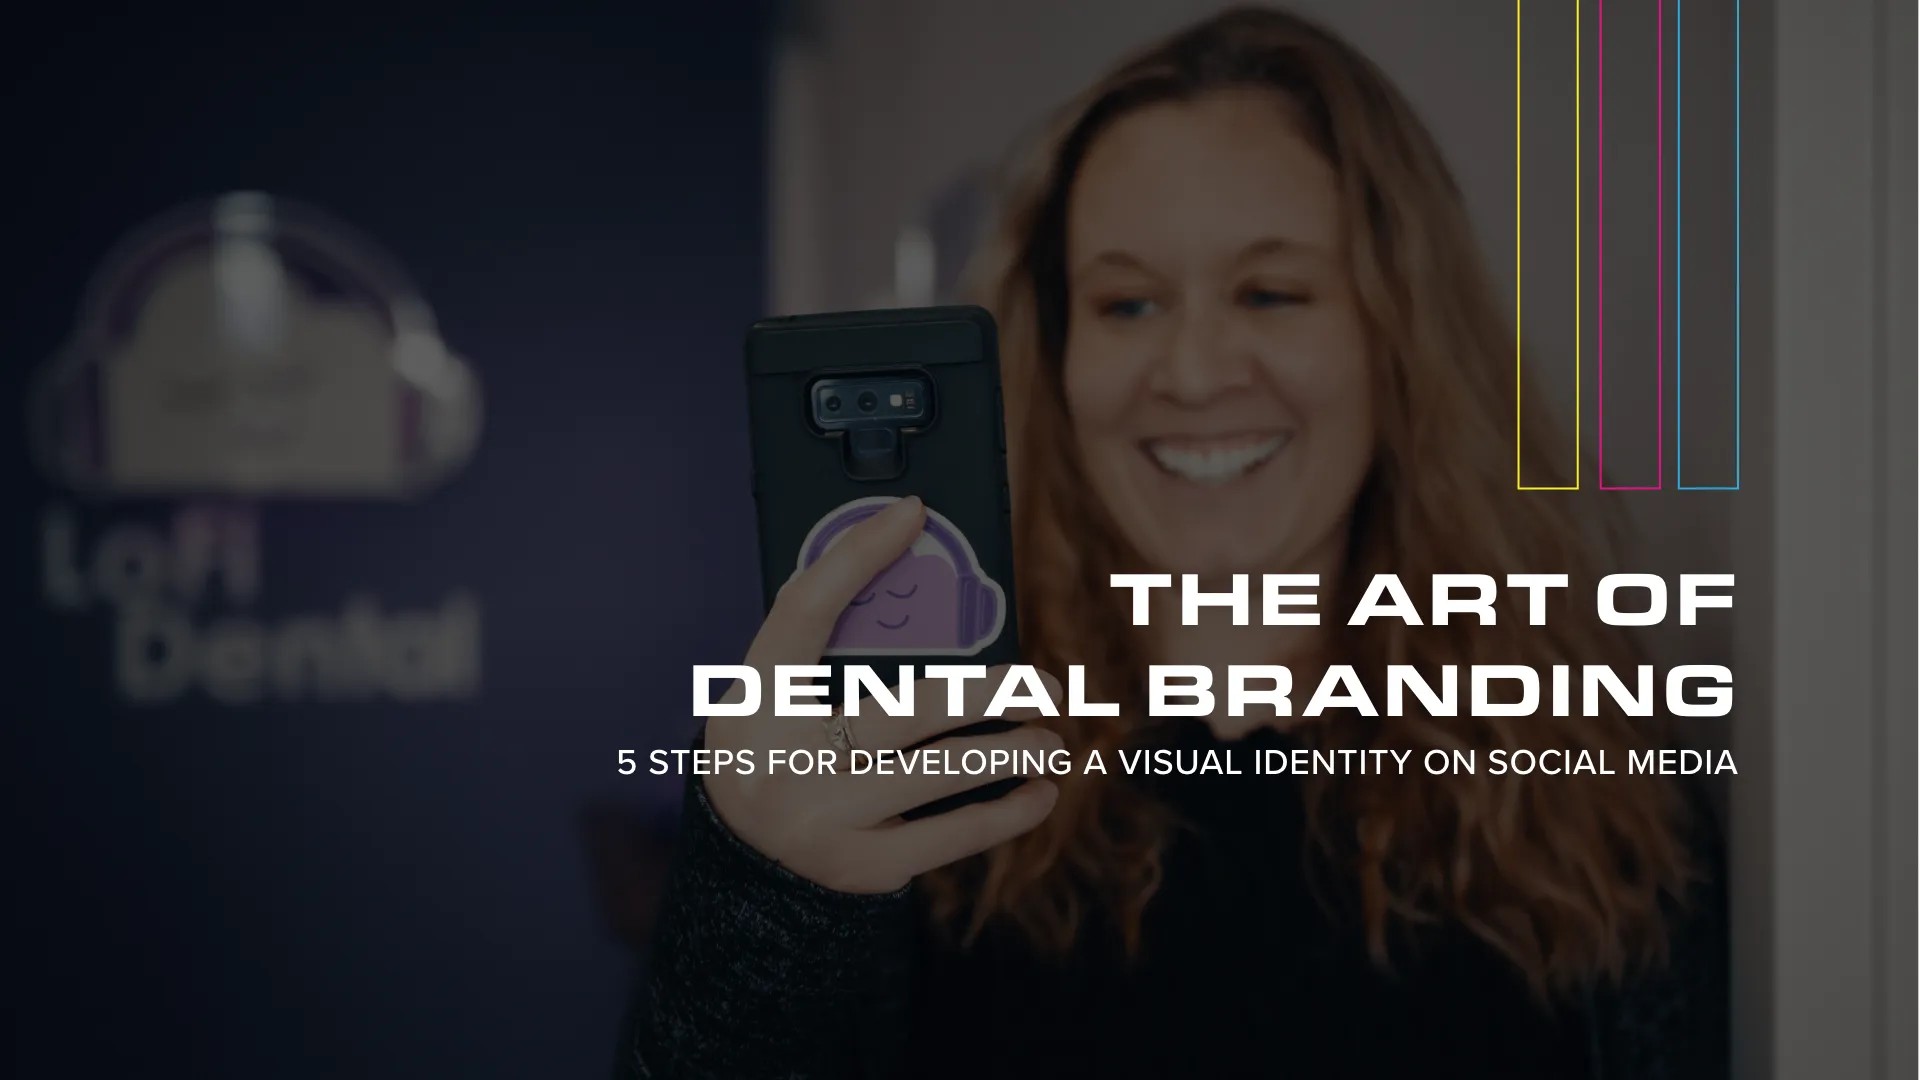 The Art of Dental Branding: 5 Steps For Developing a Visual Identity on Social Media